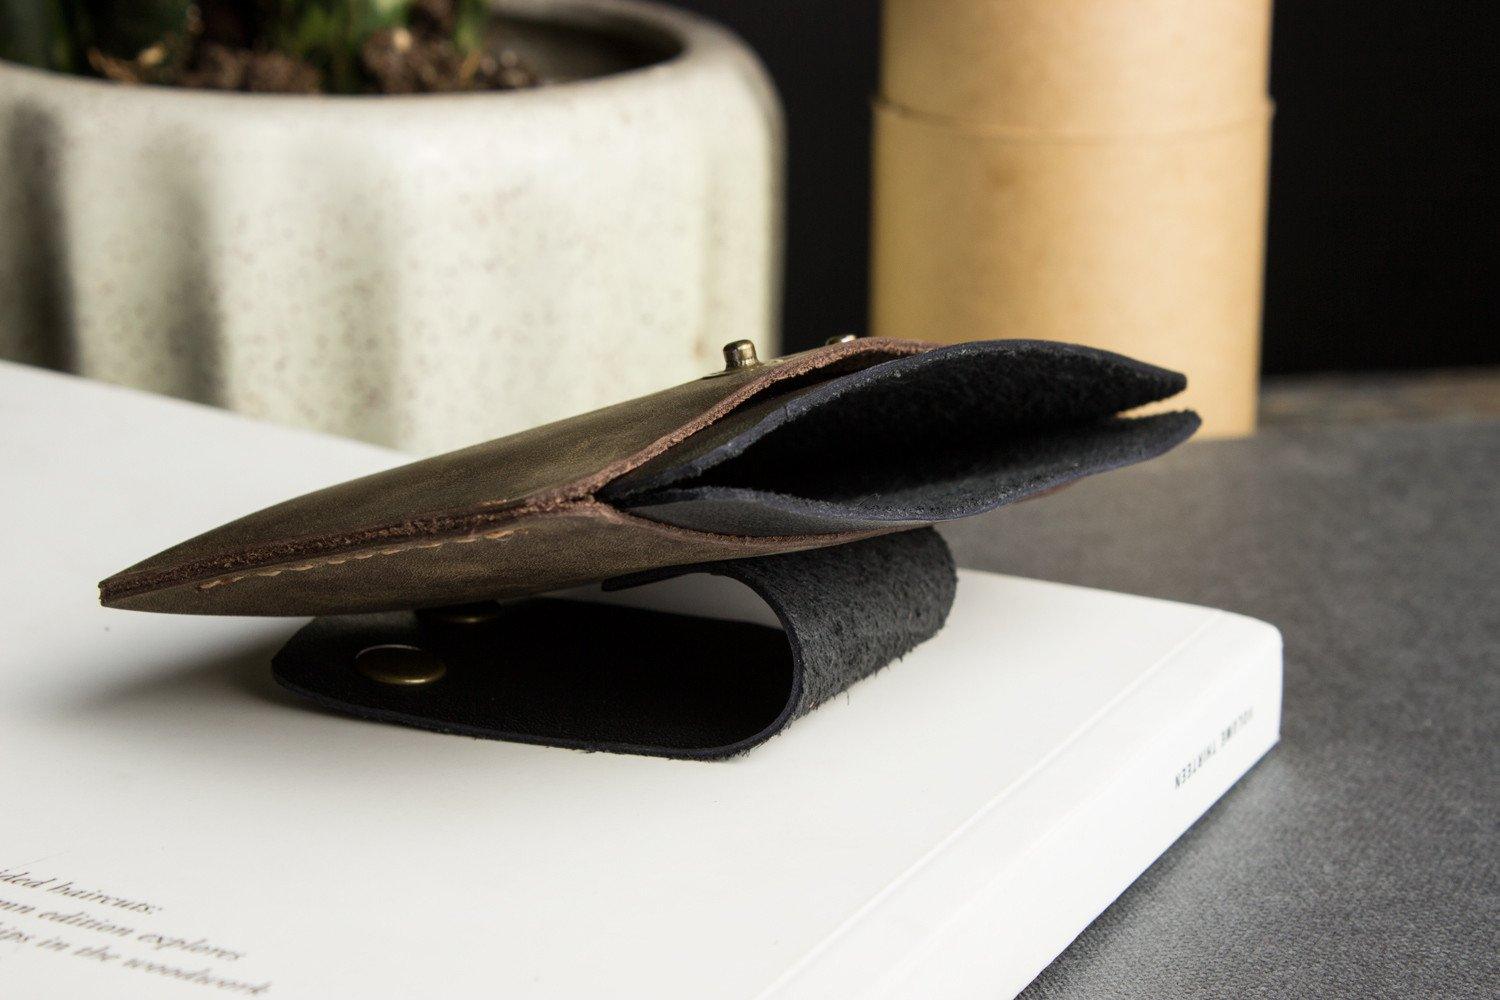 Kiko Leather Leather Card Case - Flyclothing LLC